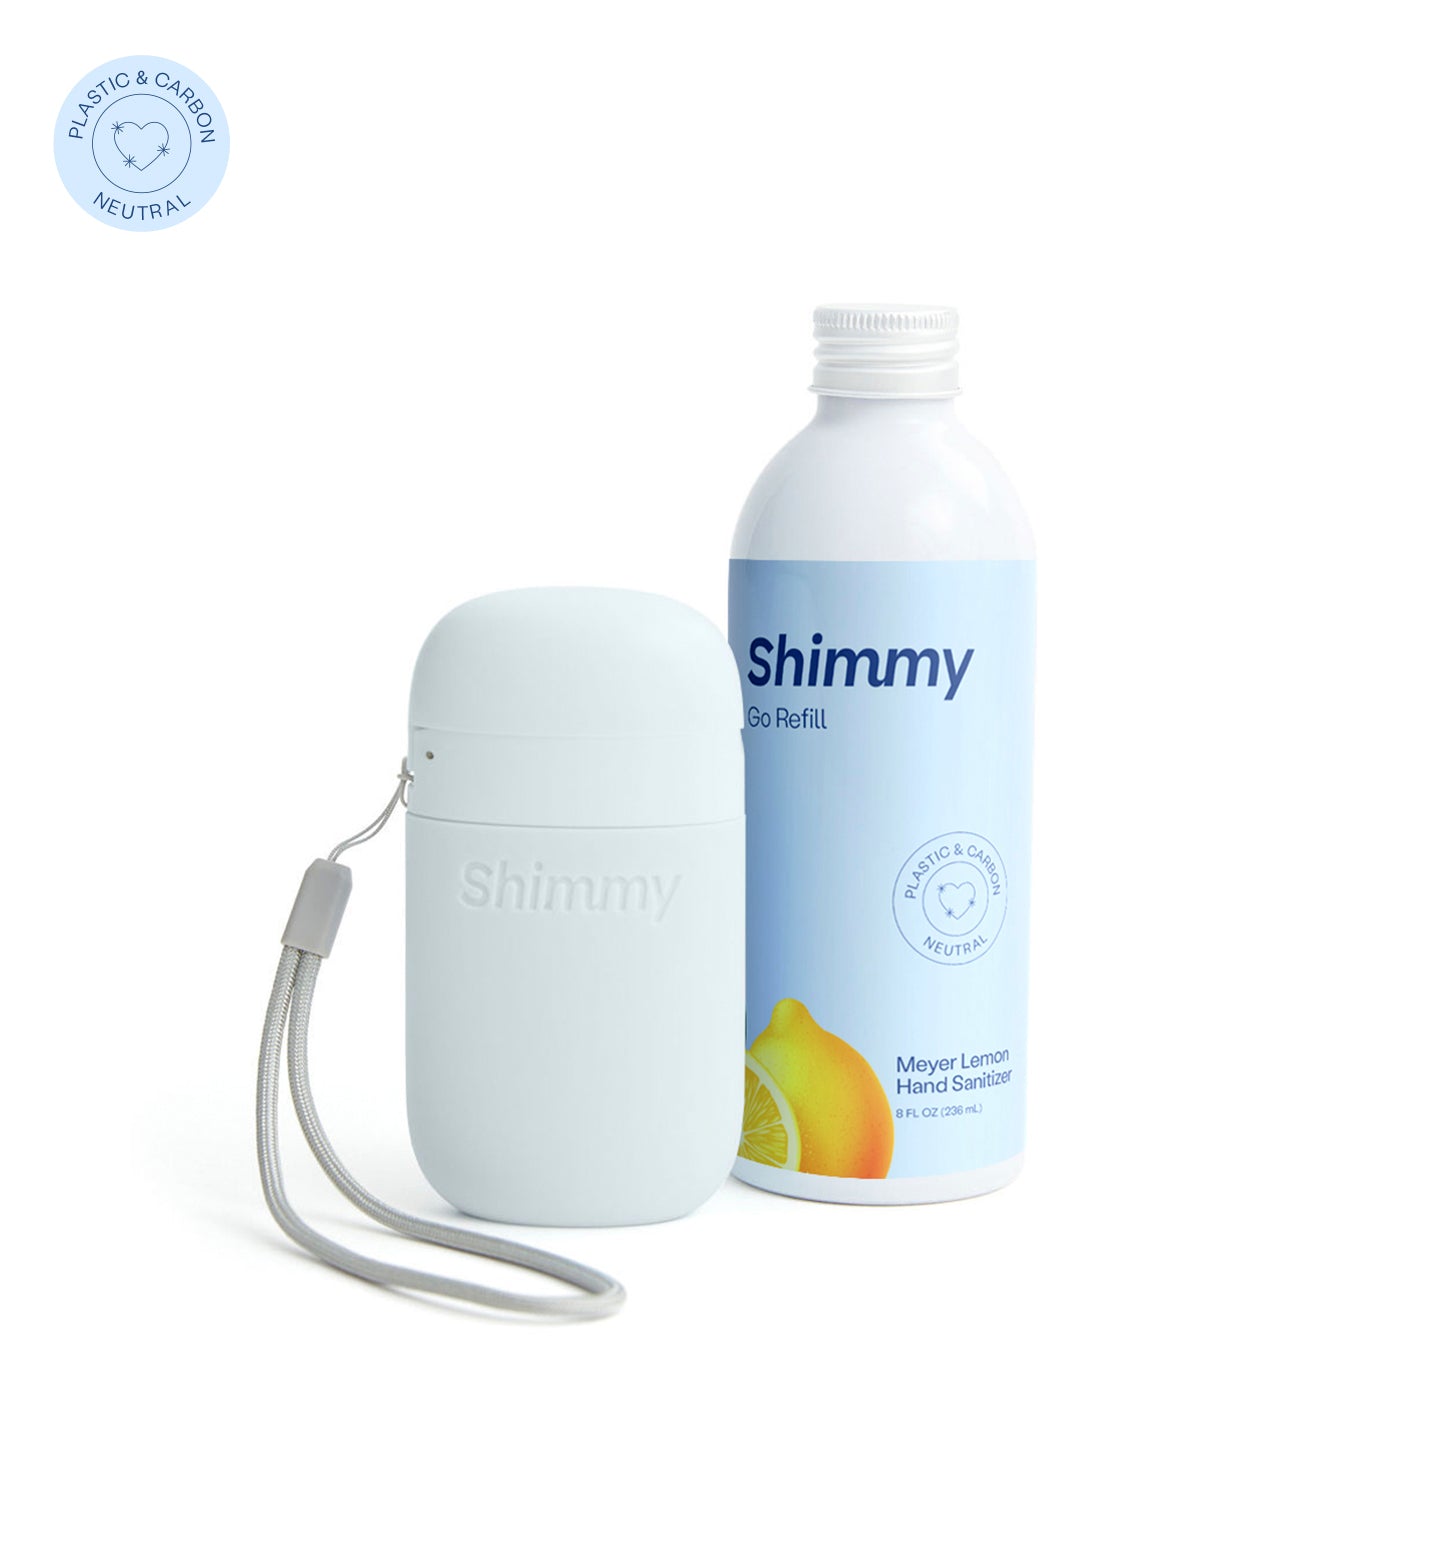 Shimmy Go Portable Hand Sanitizer Dispenser Soft Blue + Meyer Lemon Hand Sanitizer [40734807326911] - 